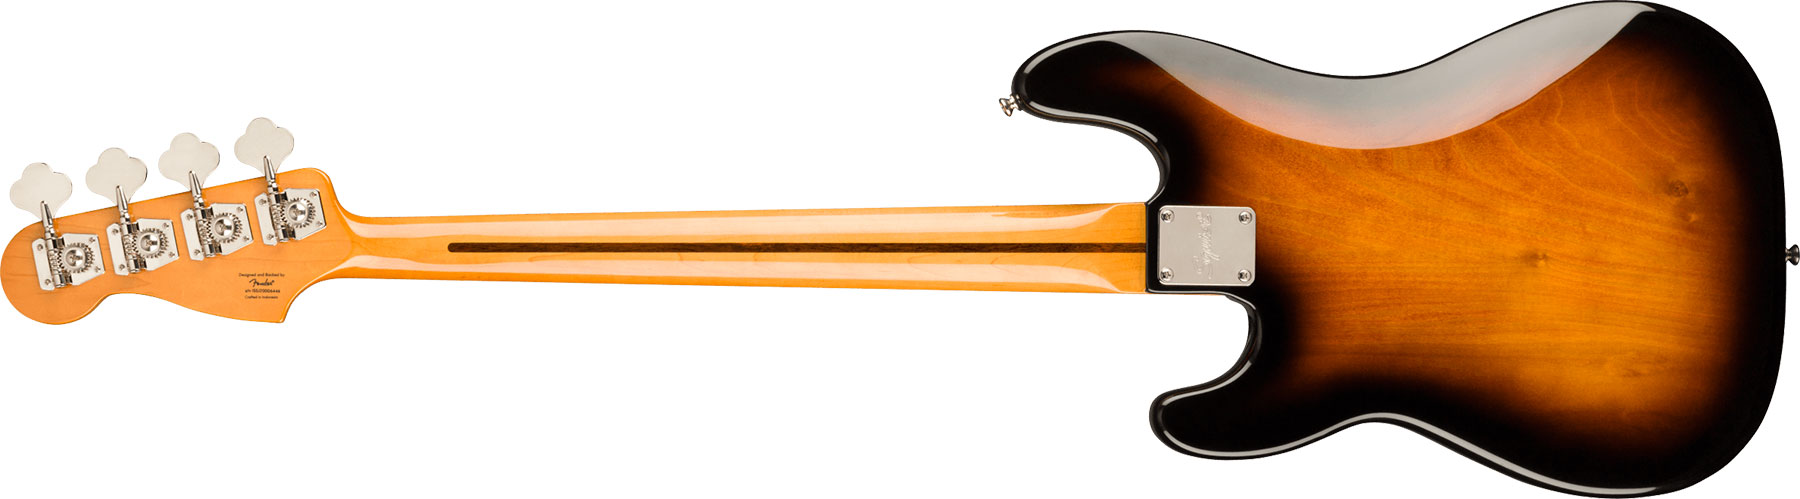 Squier Precision Bass Late '50s Classic Vibe Fsr Ltd Mn - 2-color Sunburst - Solid body elektrische bas - Variation 1